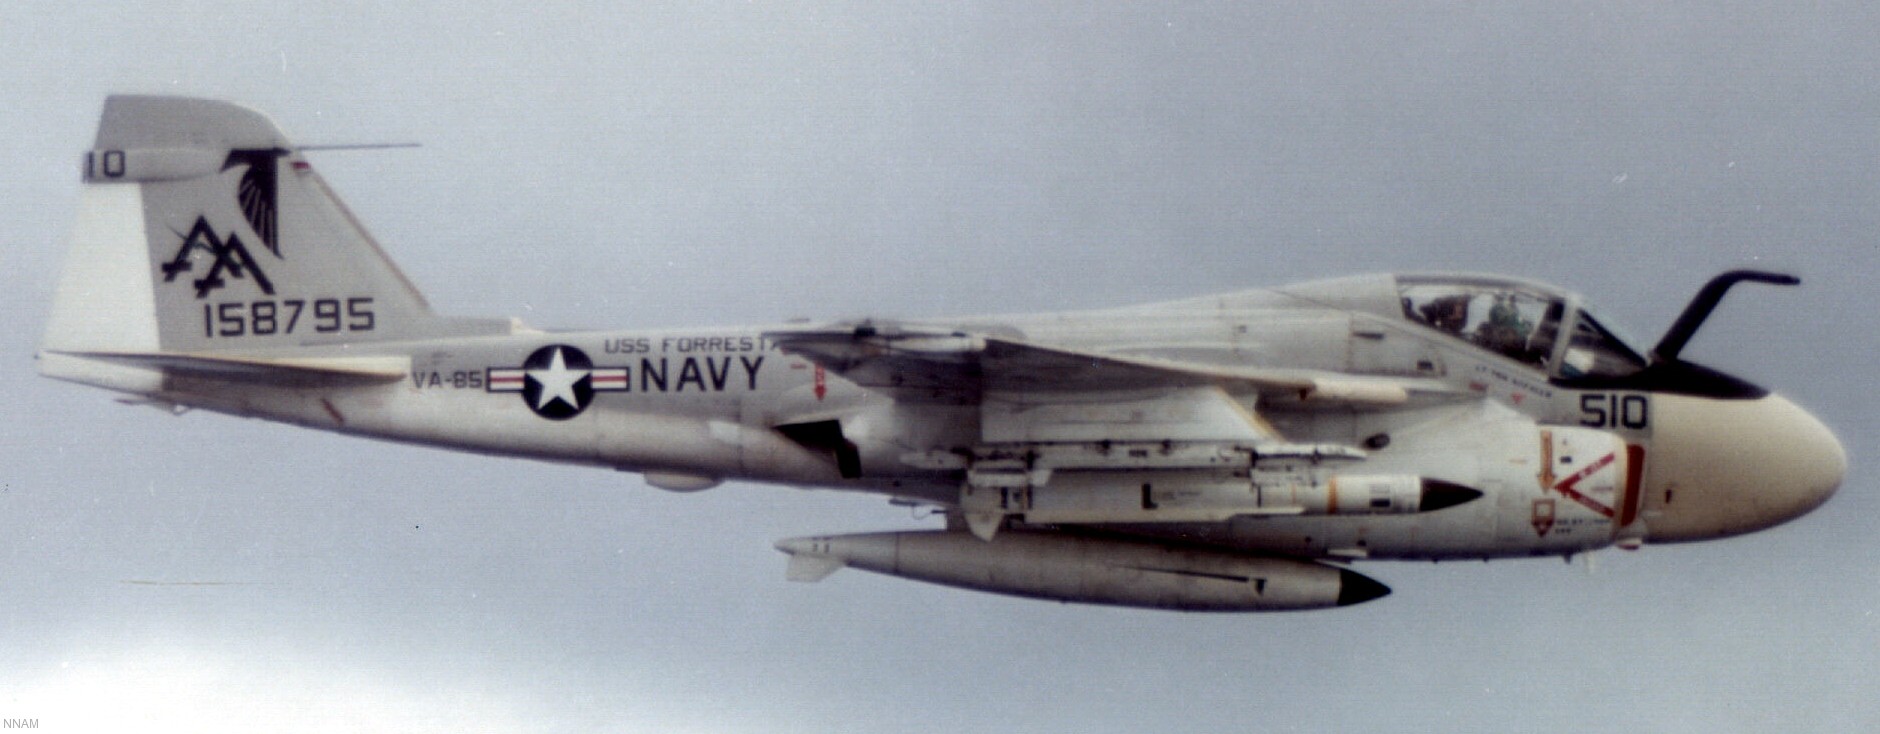 va-85 black falcons attack squadron us navy a-6e intruder carrier air wing cvw-17 uss forrestal cv-59 07 agm-78 standard arm missile